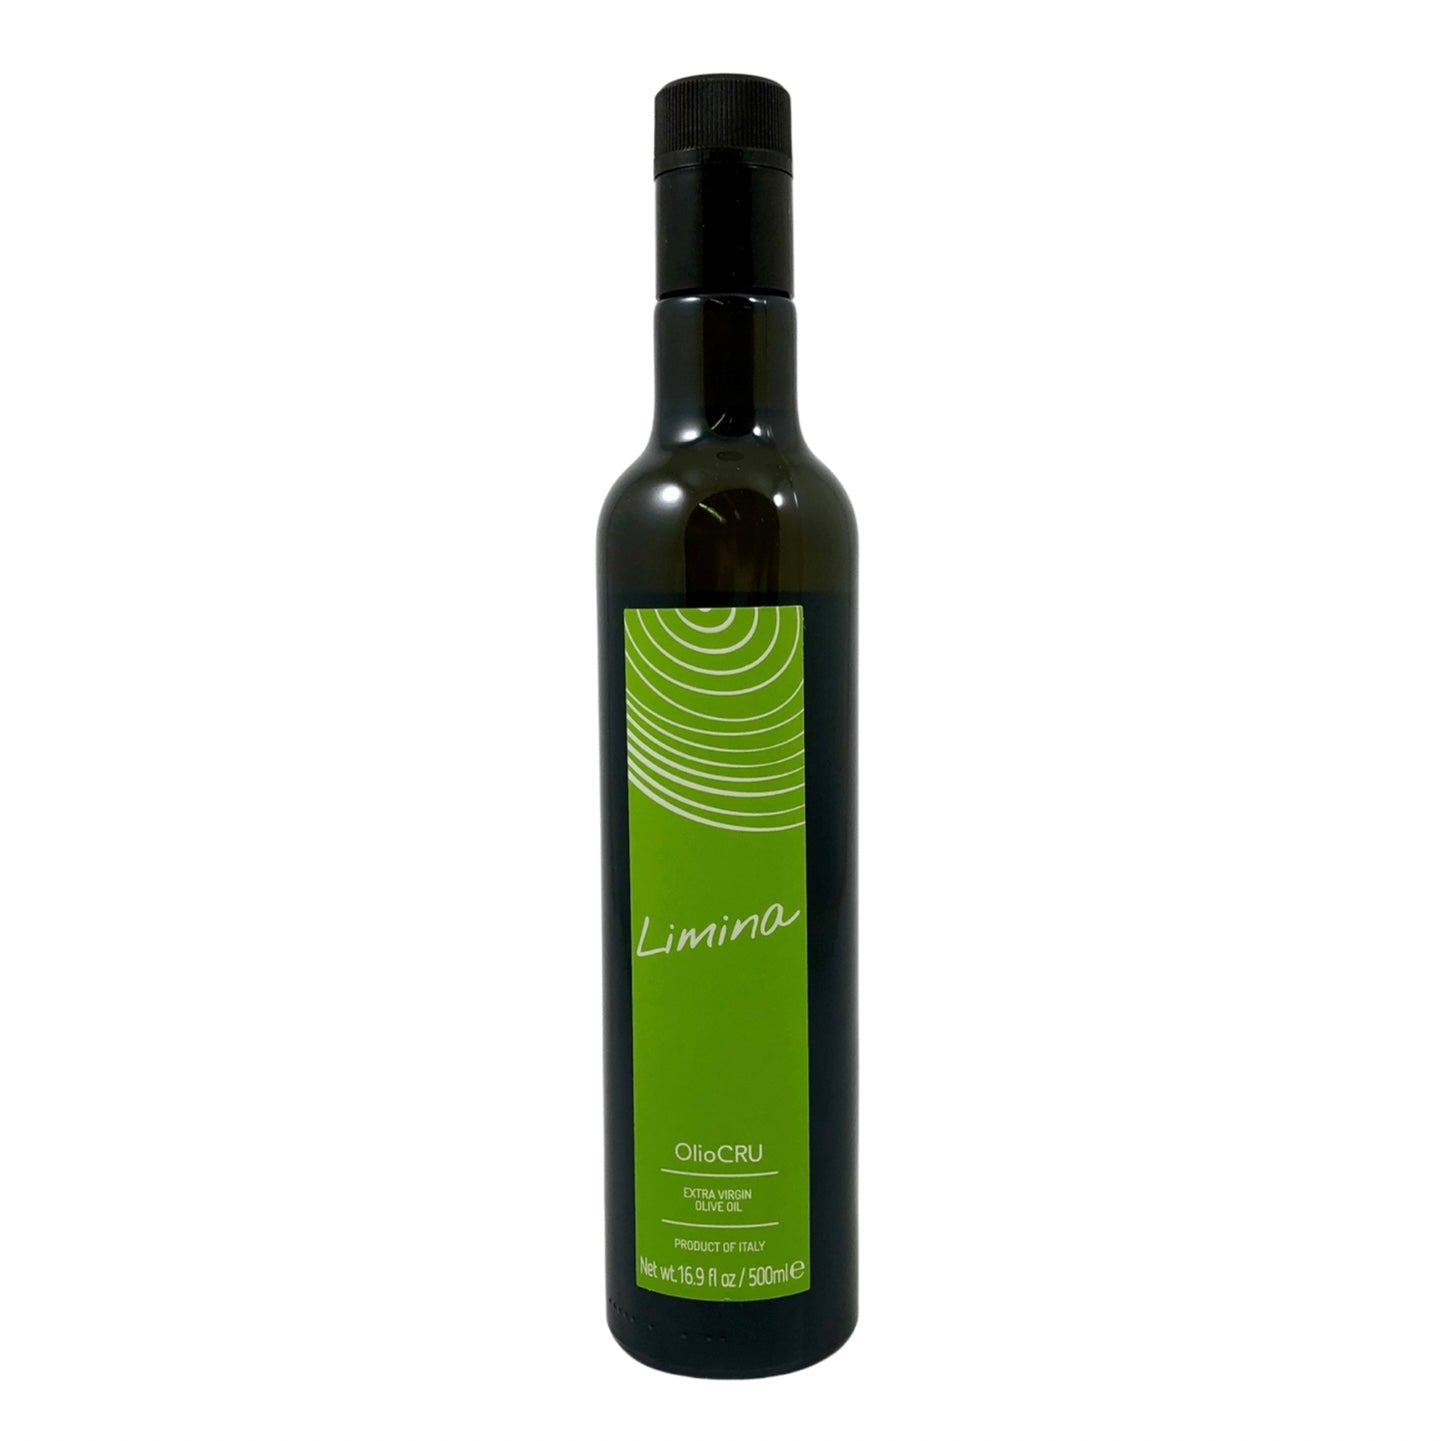 OlioCru Limina Extra Virgin Olive Oil OCR-006